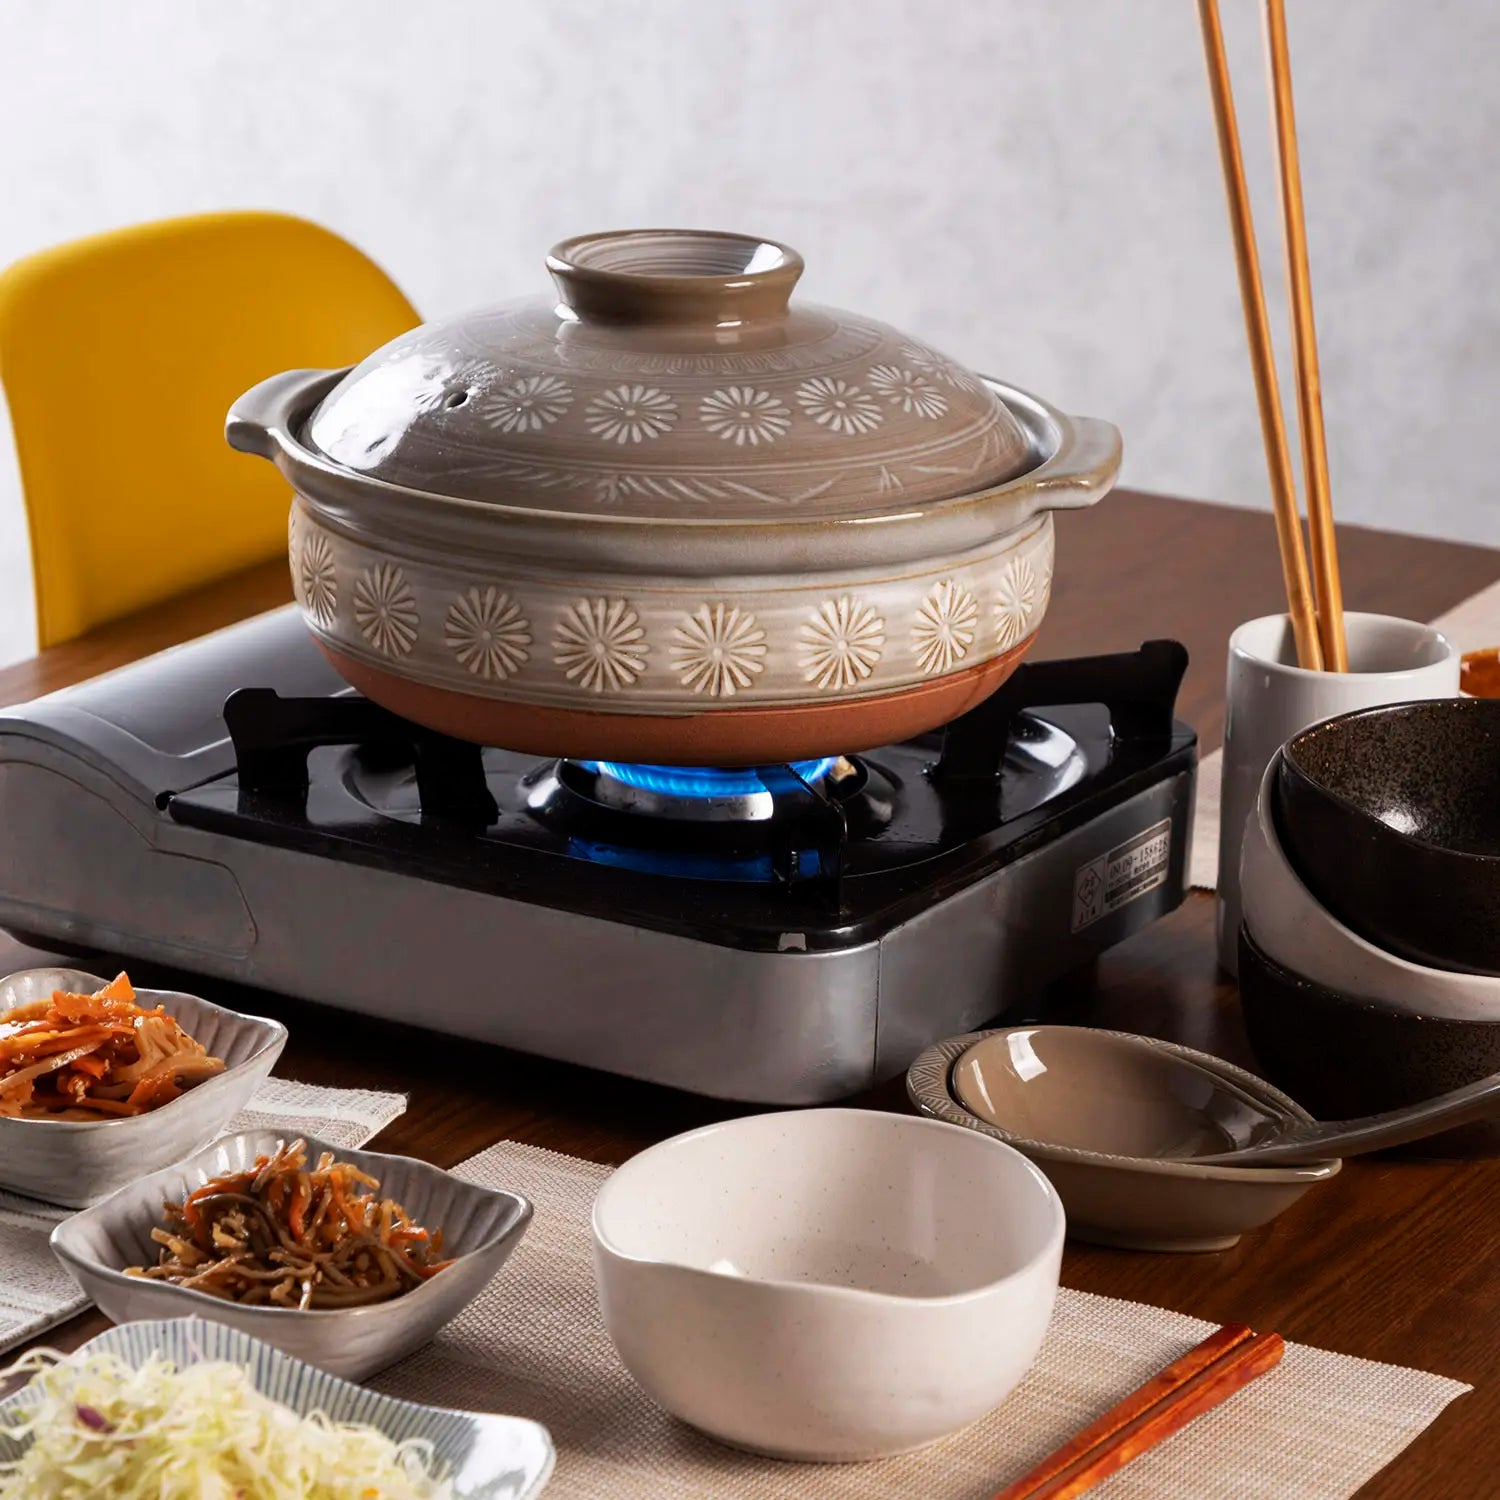 Cast Iron Shabu Pot with Divider Hot Pot - China Cast Iron Cookware and  Cast Iron Wok price